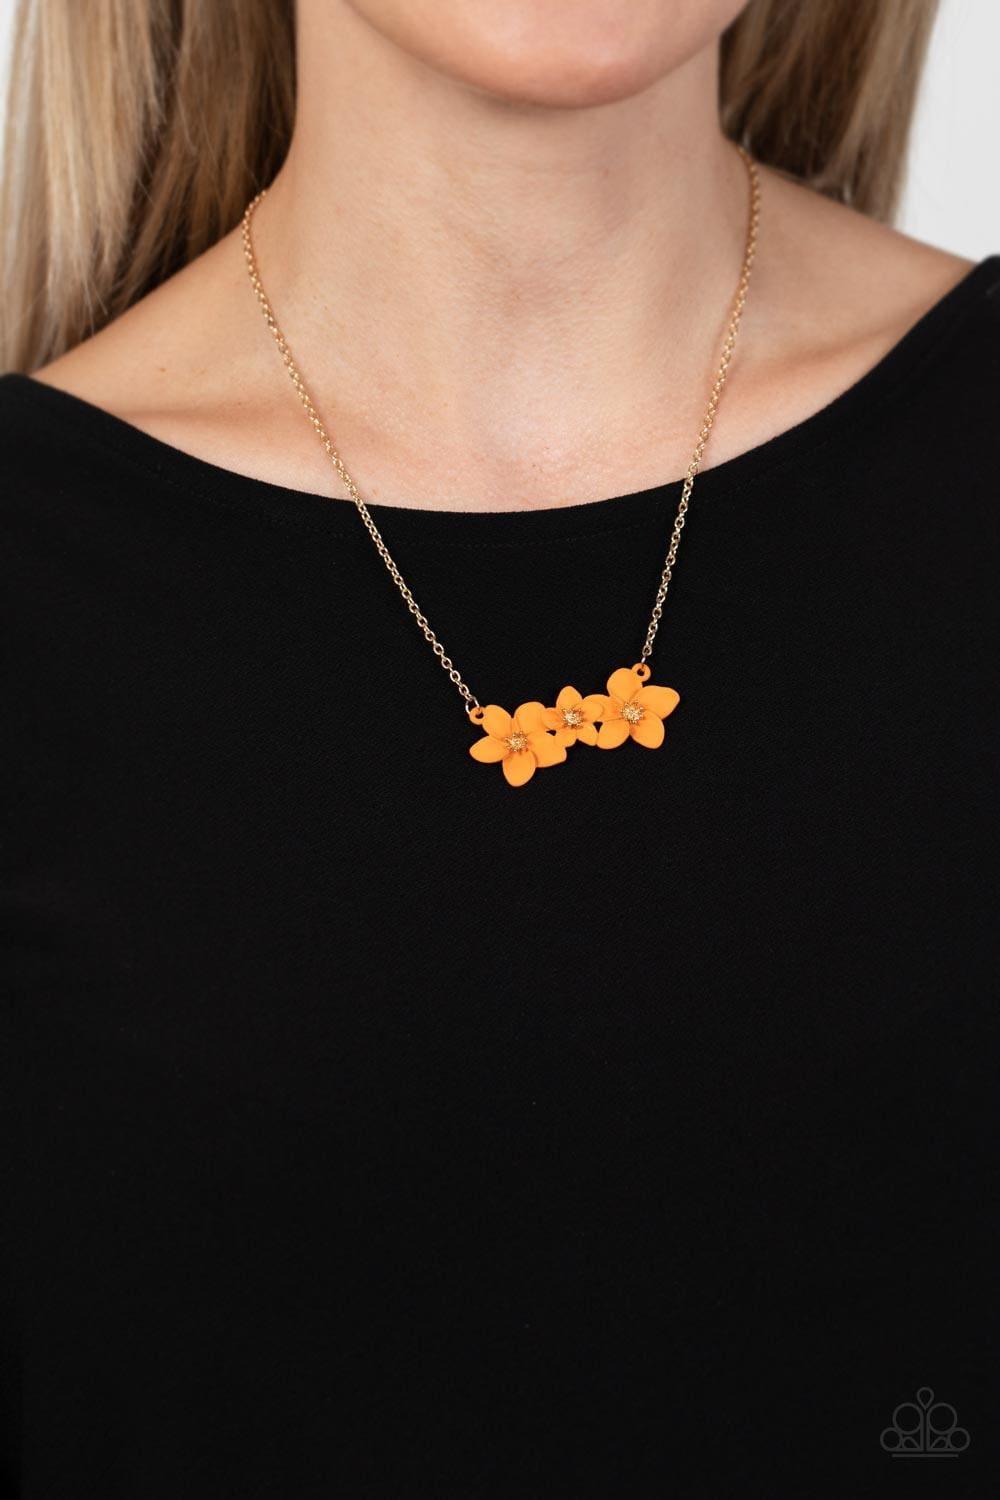 Paparazzi Accessories - Petunia Picnic - Orange Necklace - Bling by JessieK